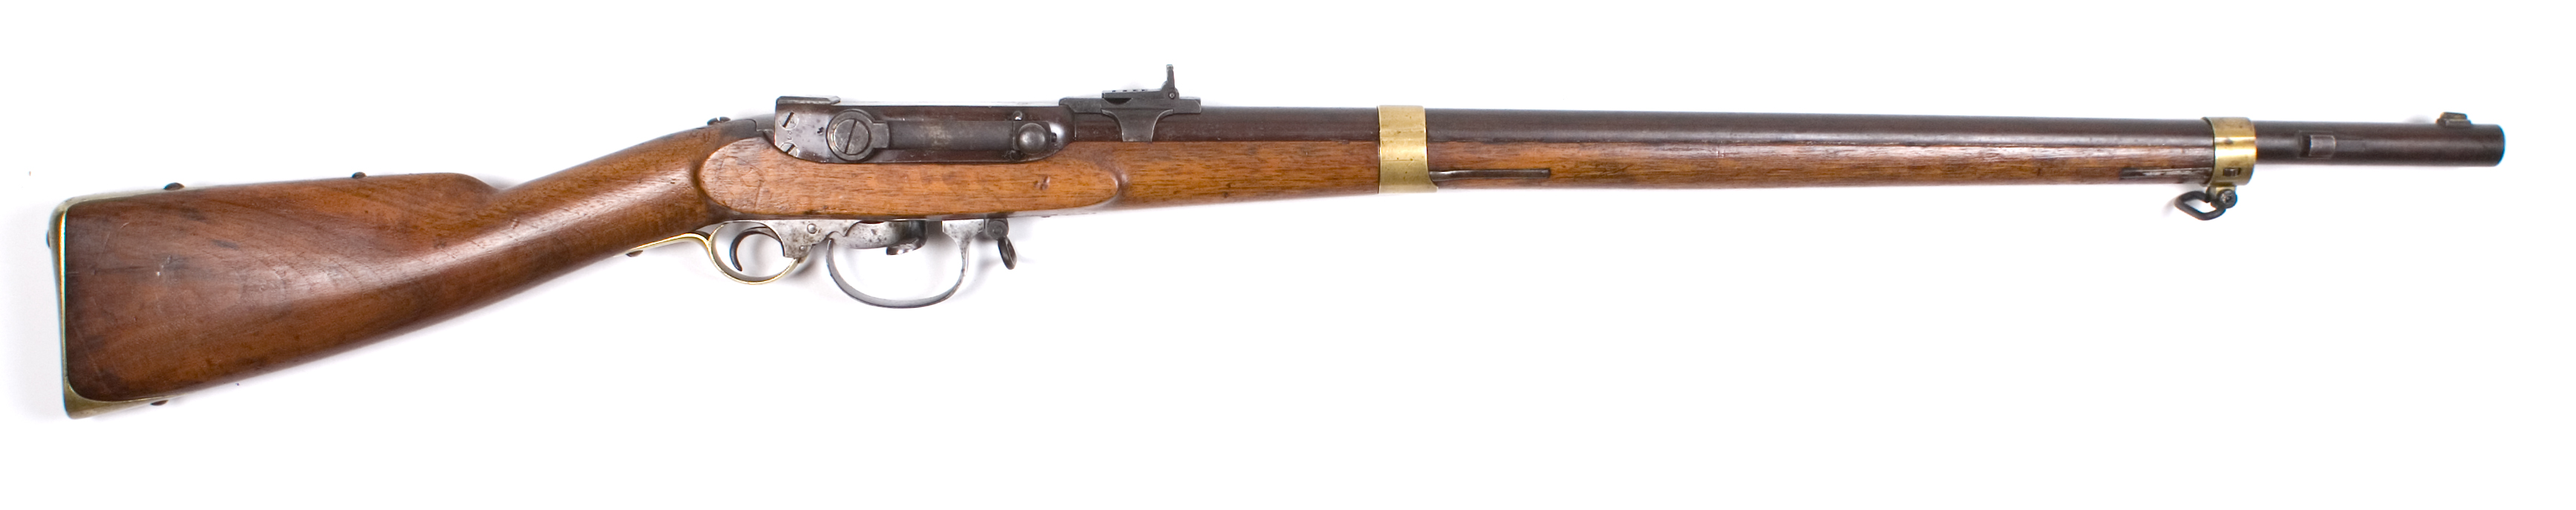 ./guns/rifle/bilder/Rifle-Herzberg-Kammerlader-M1849-55-59-1935-1.jpg